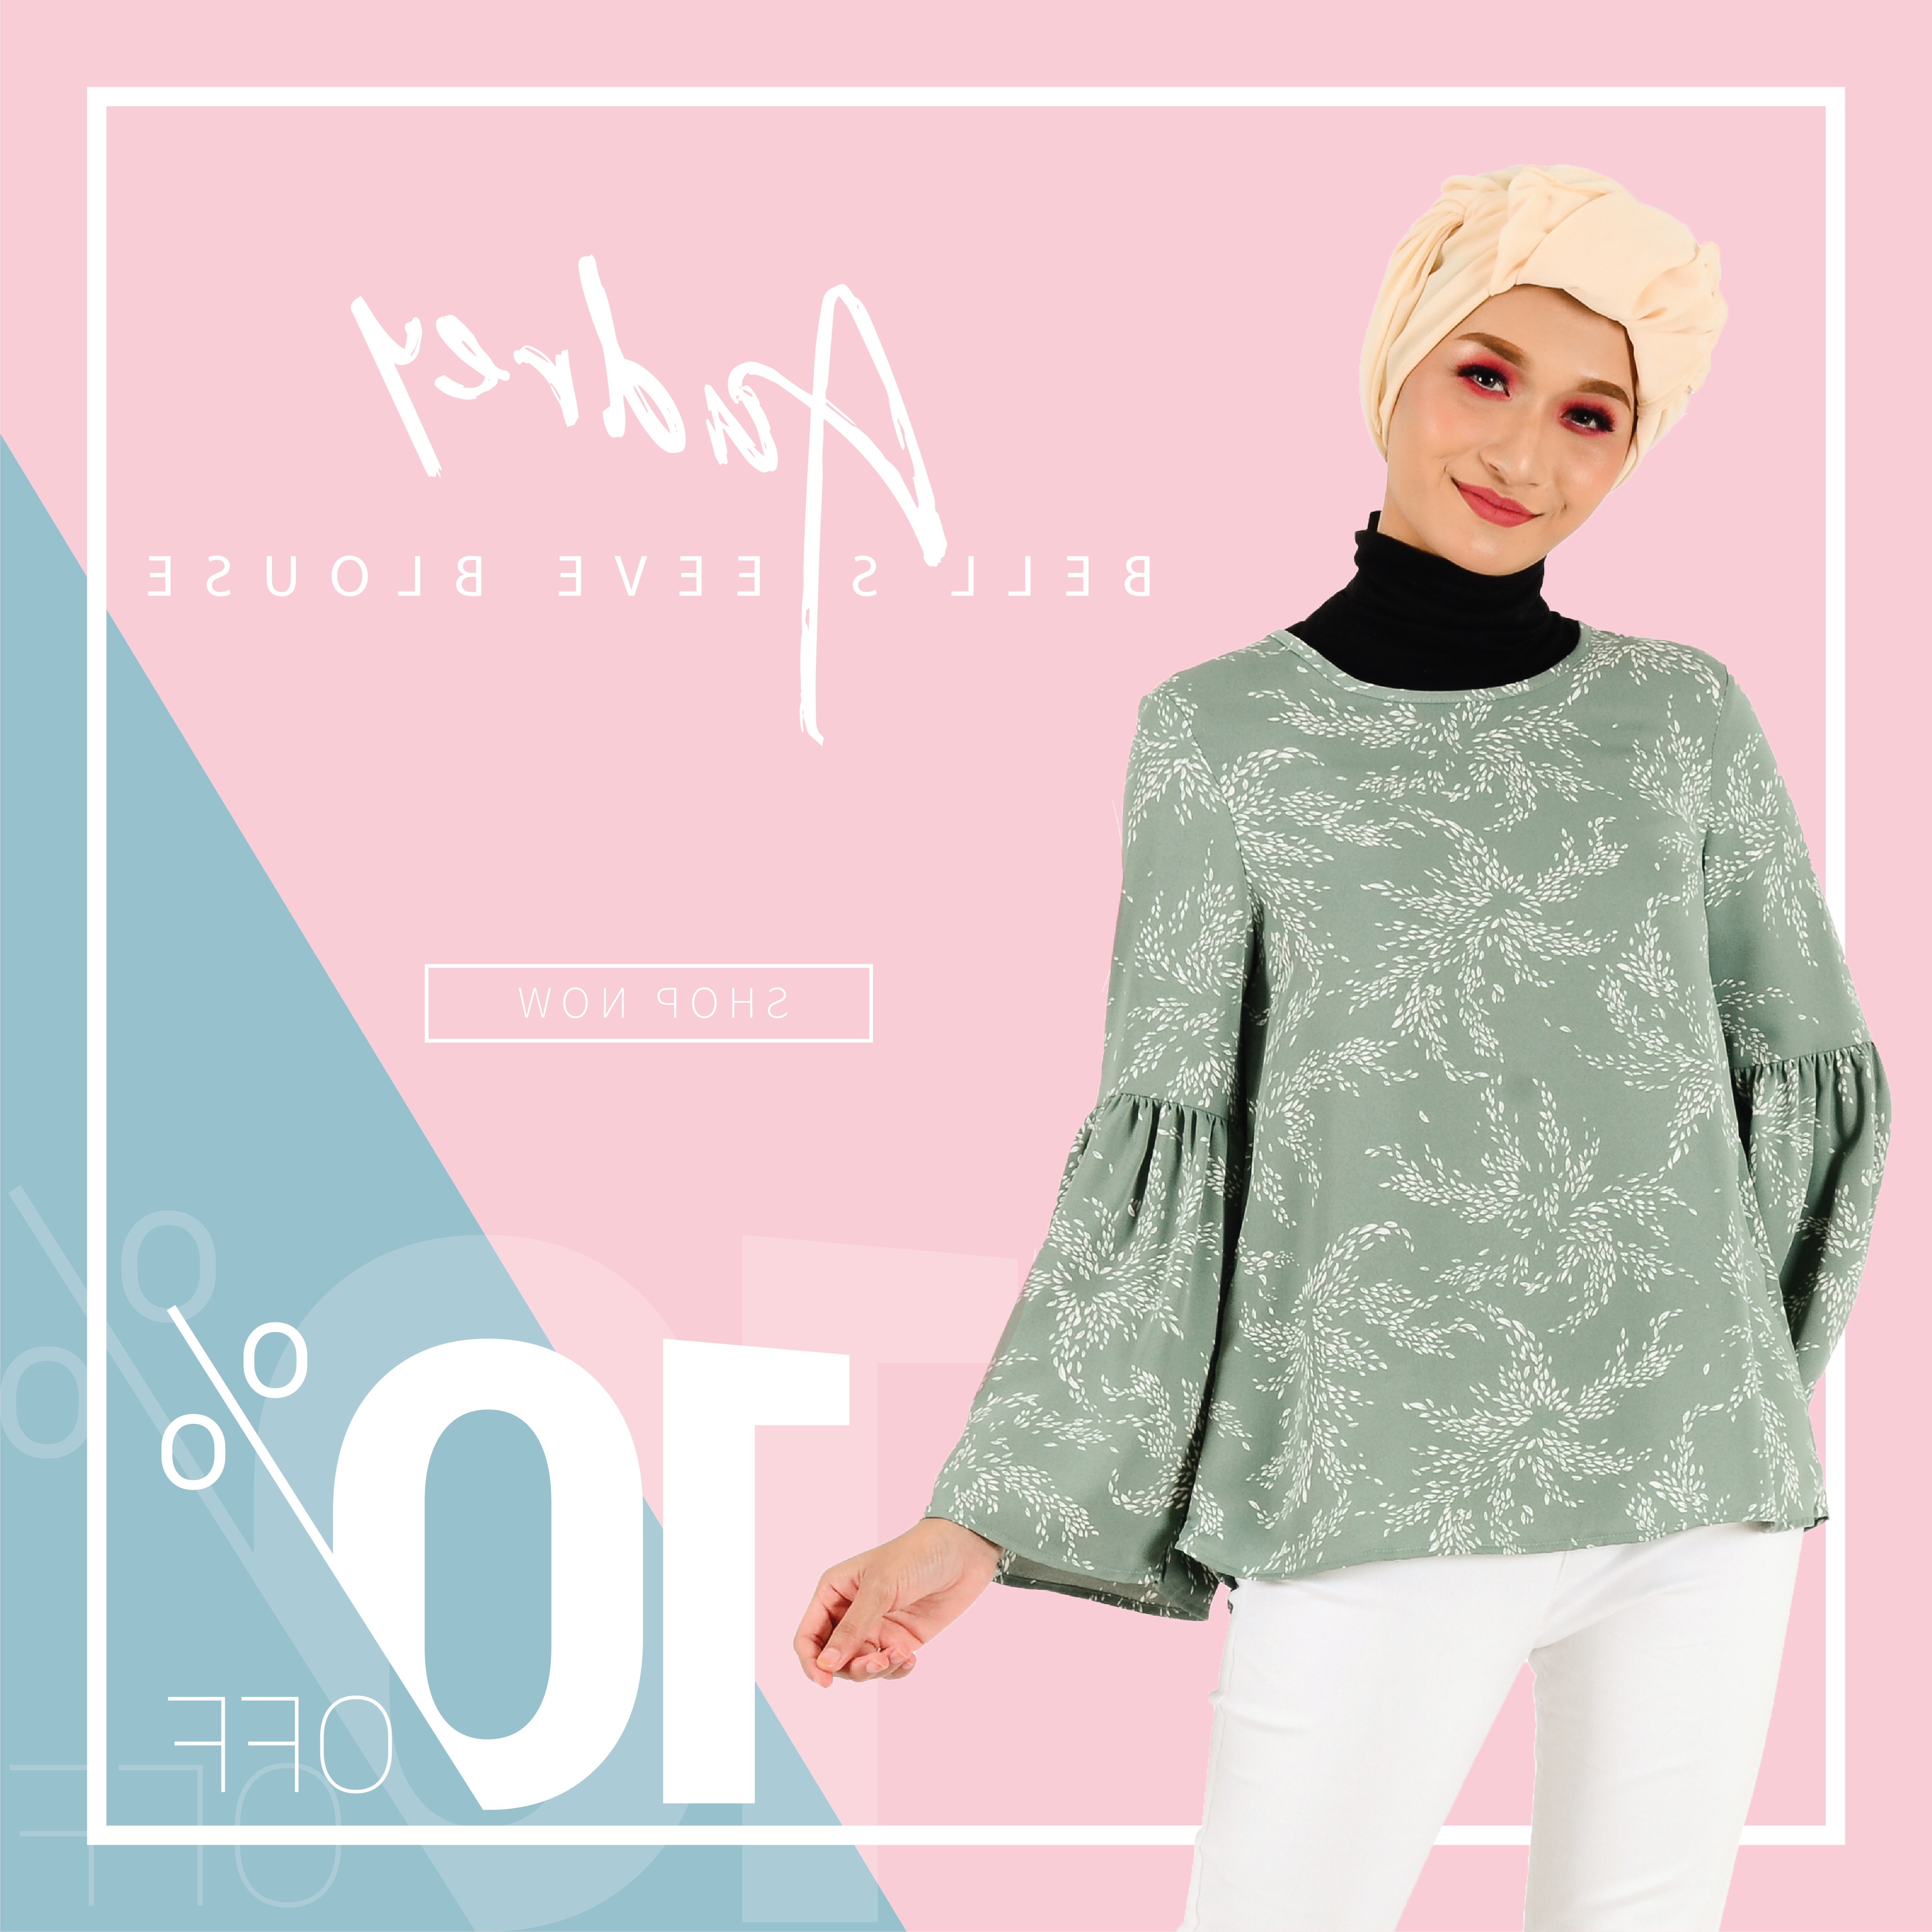 Design Desain Baju Pengantin Muslimah E6d5 Mytrend S Muslimah Fashion Blog